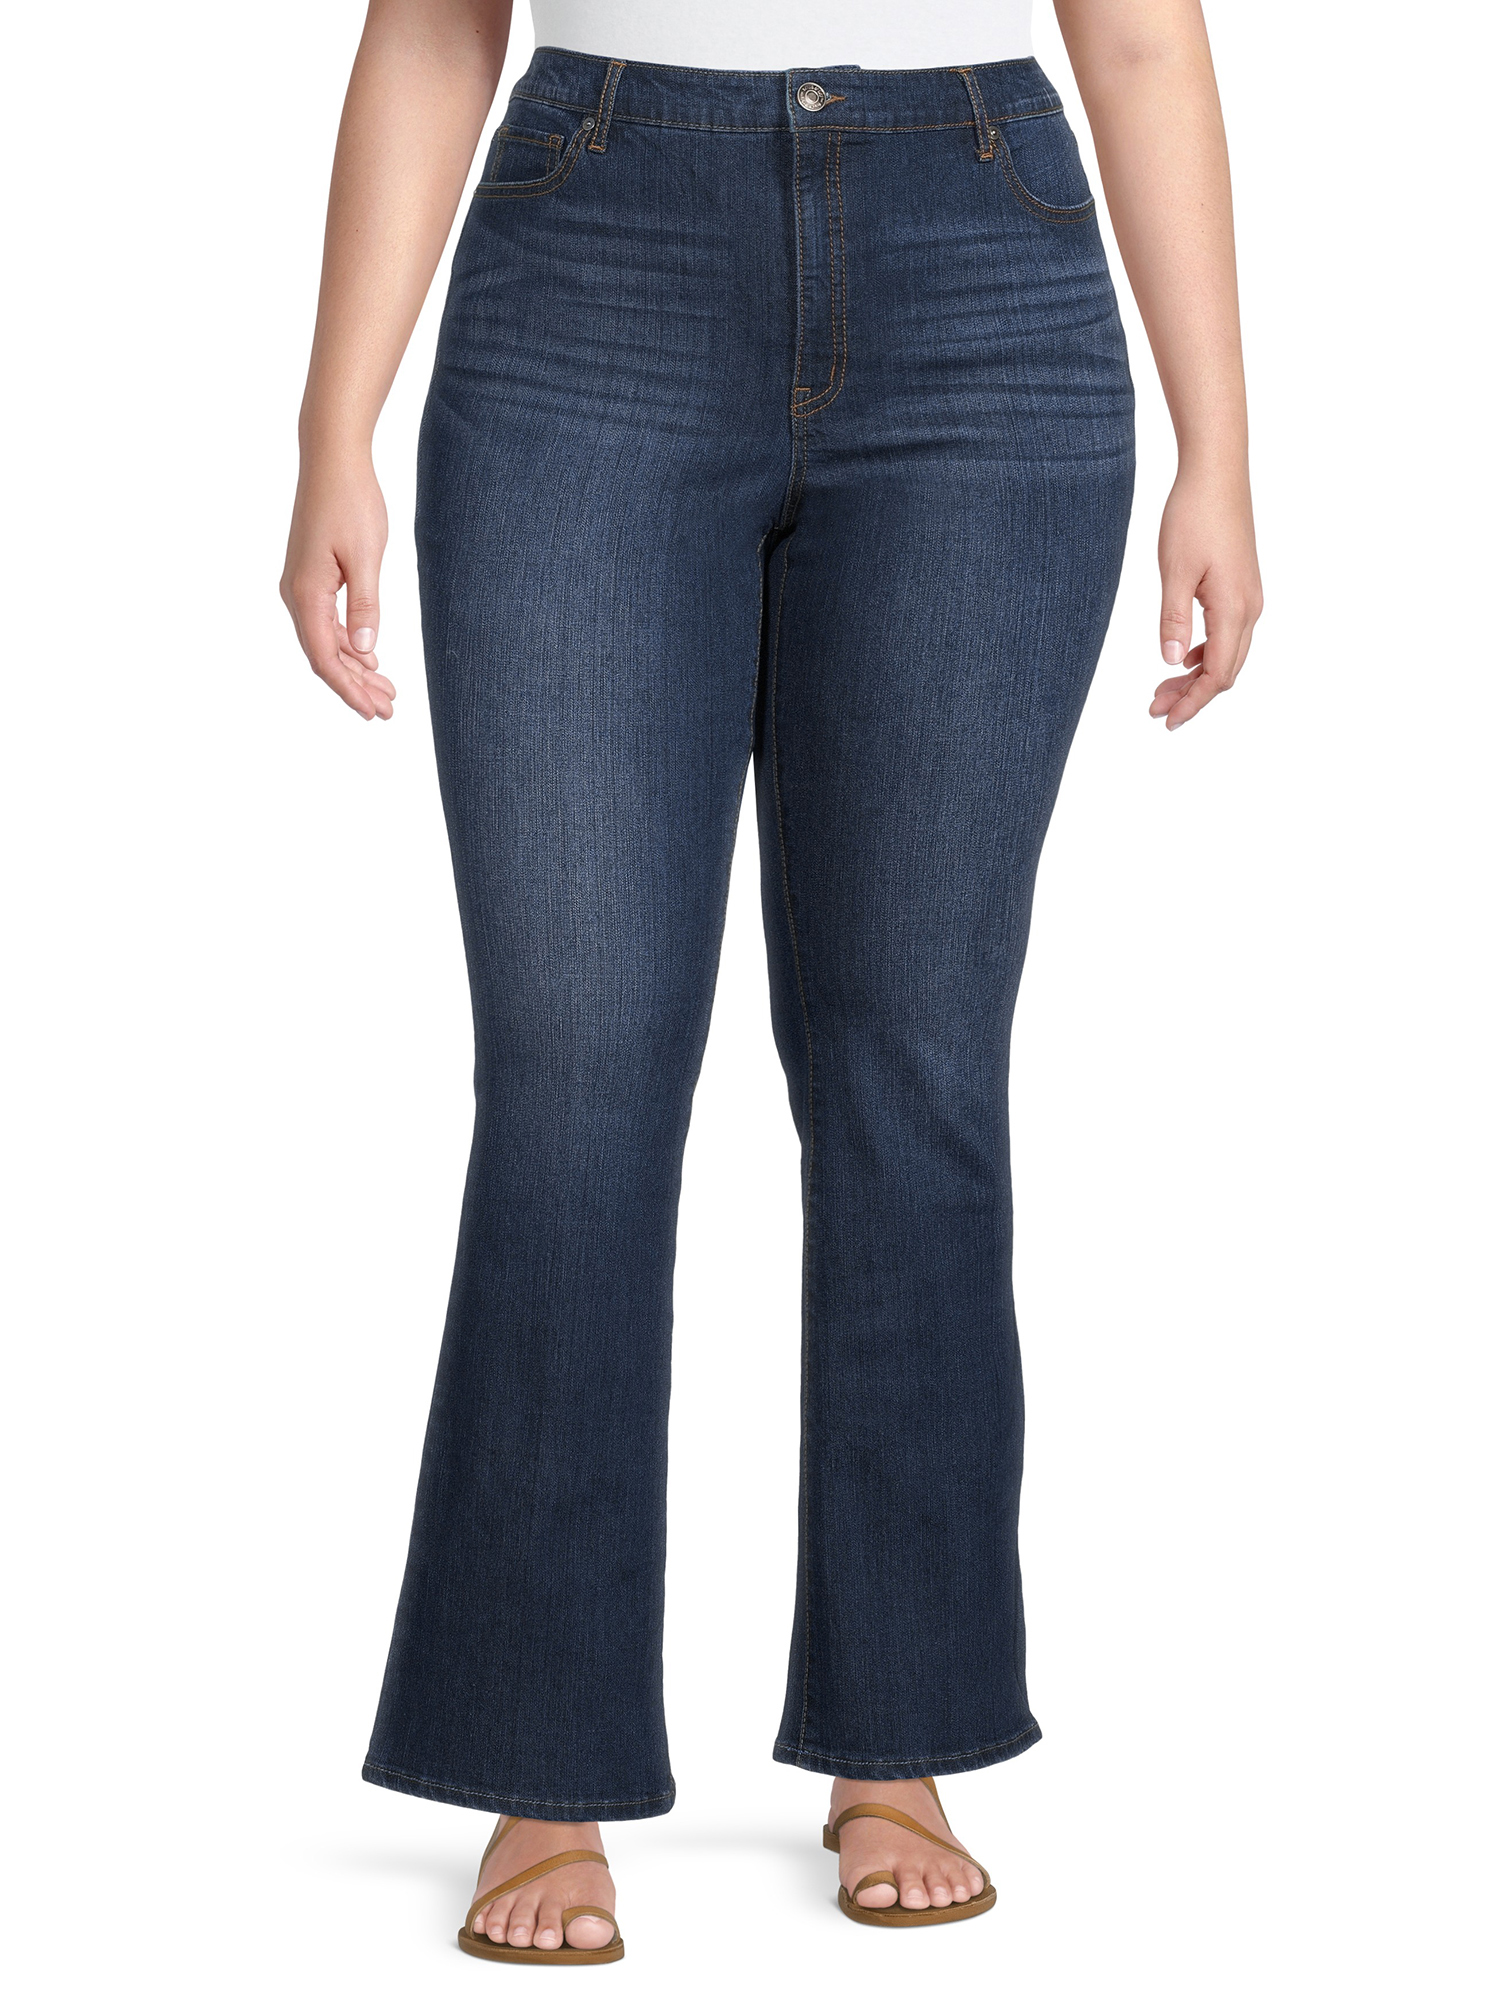 Terra & Sky Women's Plus Size Bootcut Jeans - image 1 of 6